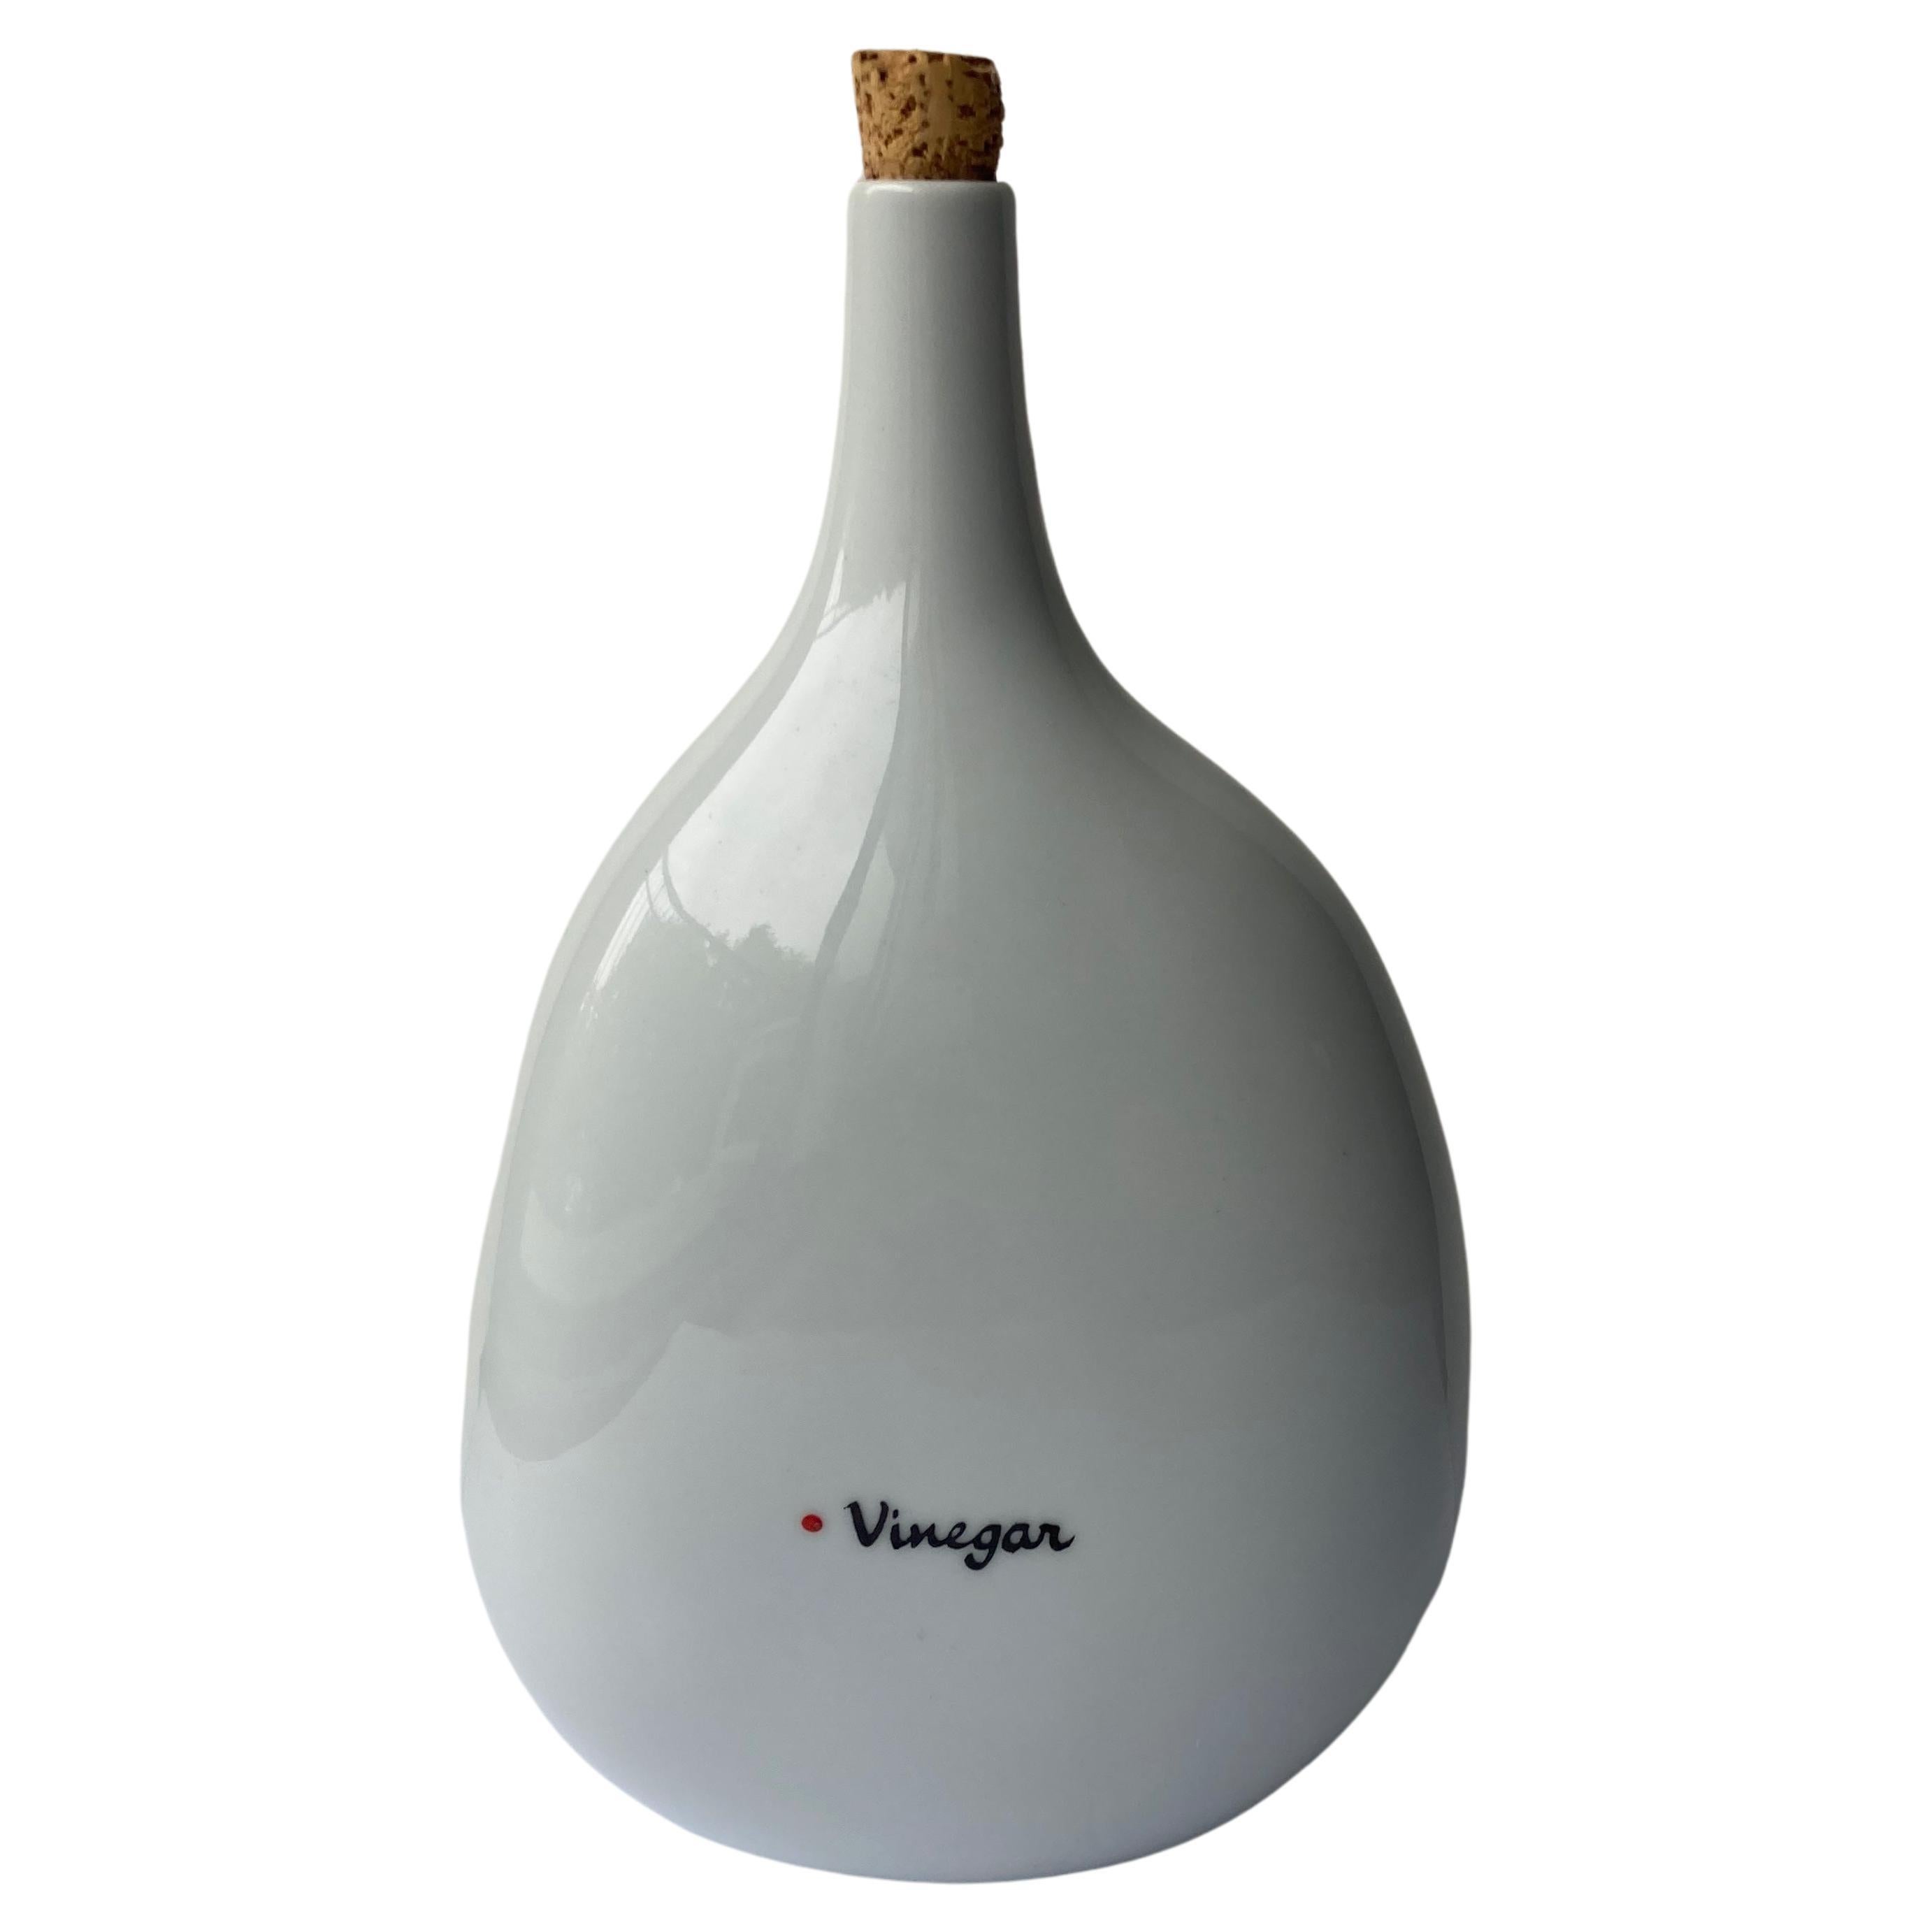 Lagardo Tackett Vinegar cruet, Architectural Pottery, Freeman Lederman .bottle For Sale